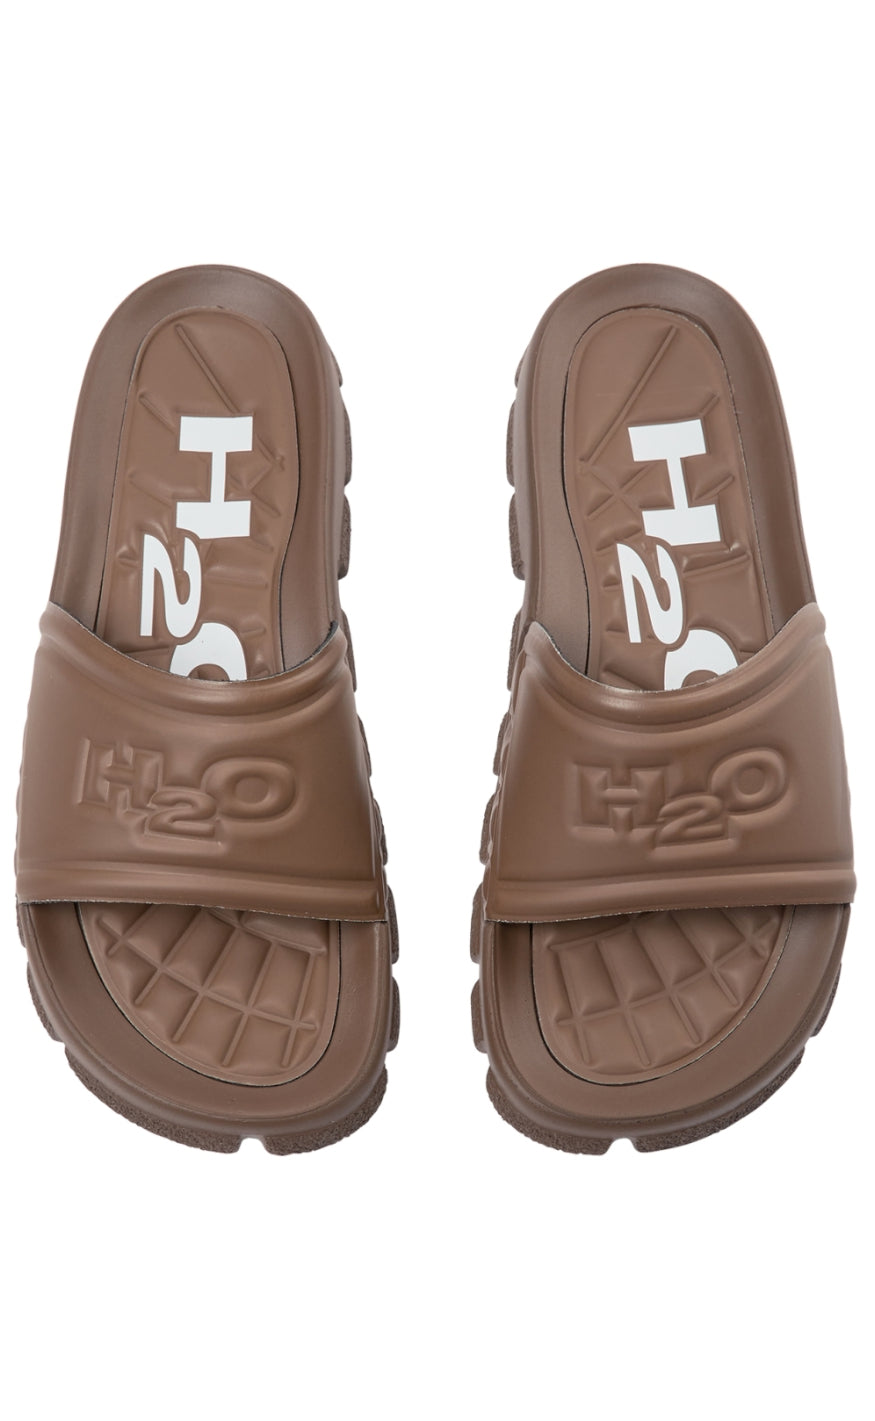 13: H2O Sandal - Trek - Chocolate Brown